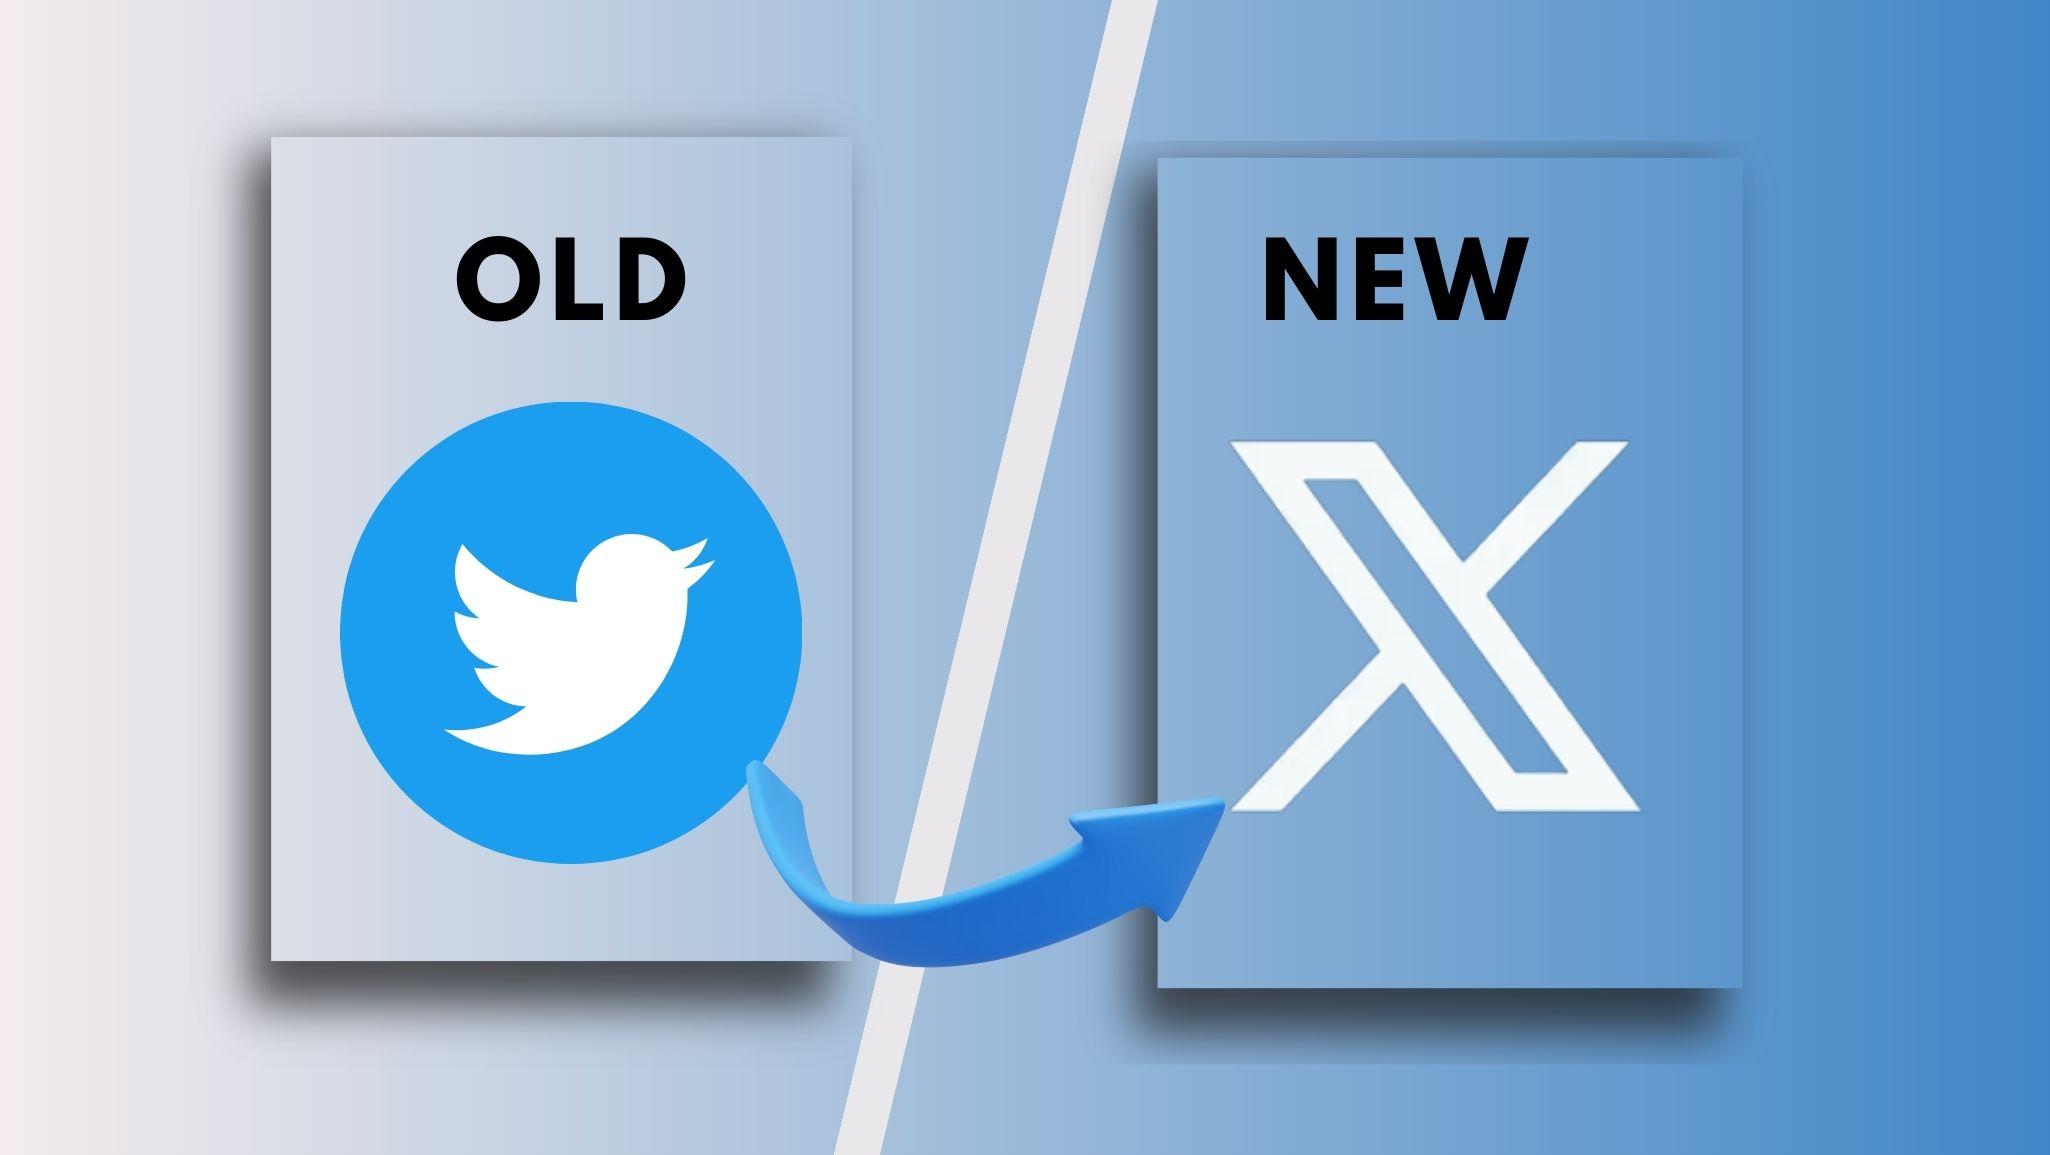 Elon Musk Leads Twitter’s Rebranding with a New ‘X’ Logo